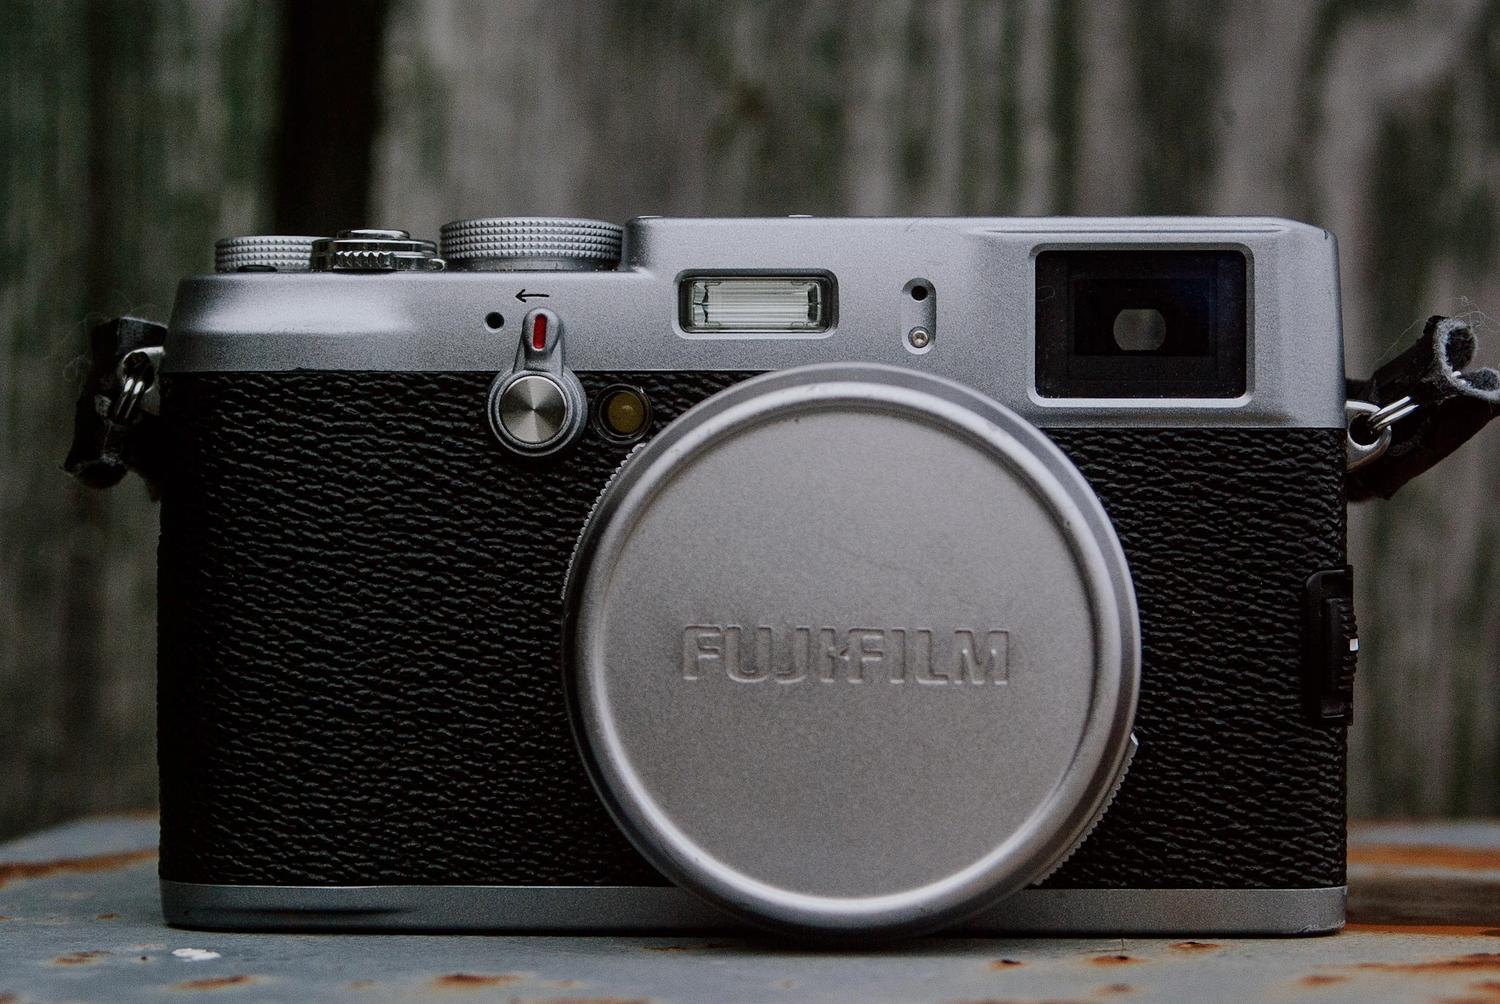  Fujifilm X100V Digital Camera - Black : Electronics